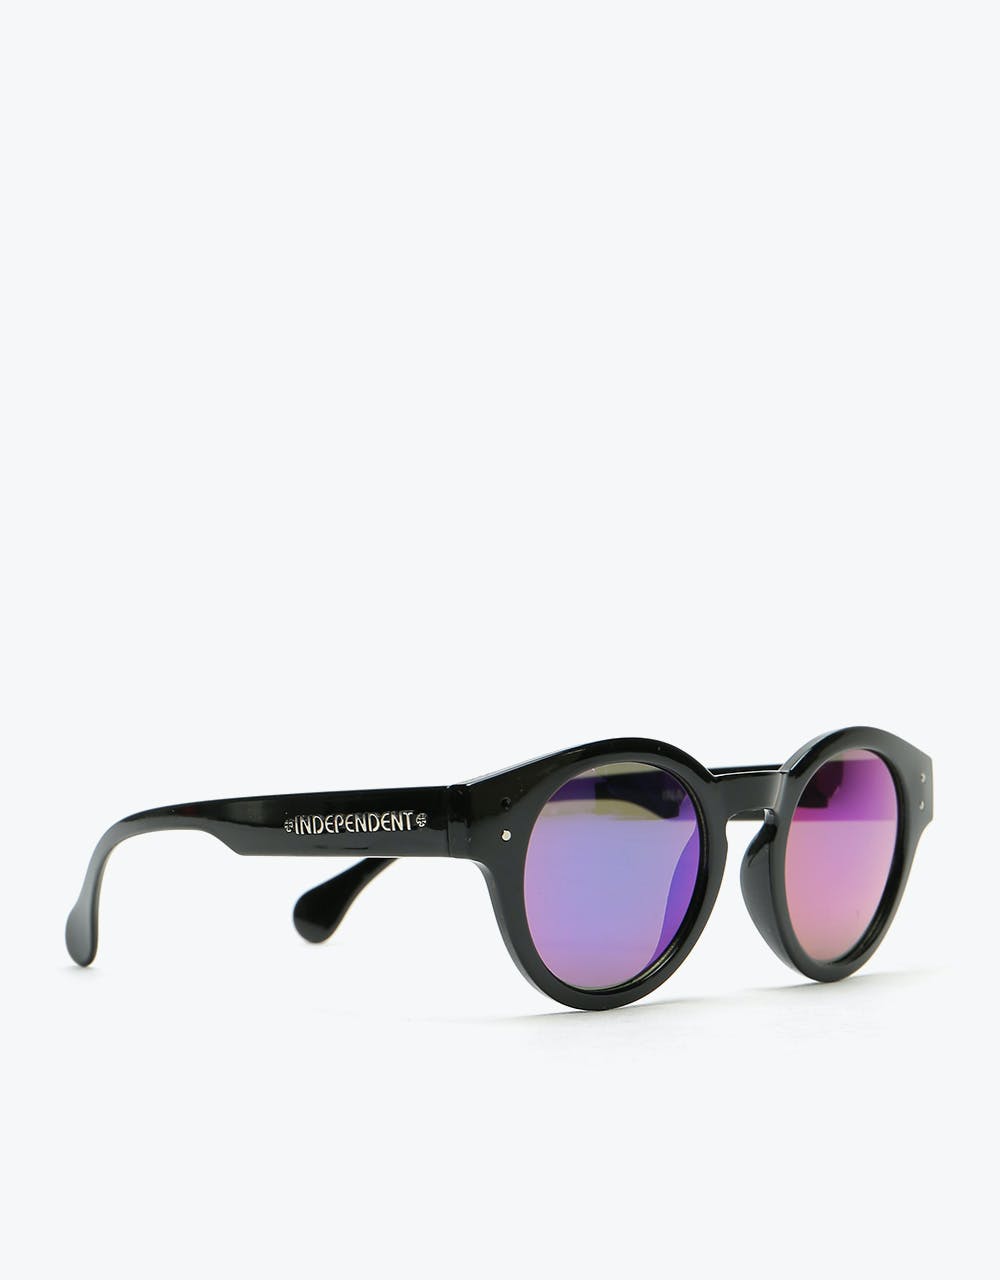 Independent Barrier Mirror Sunglasses - Black